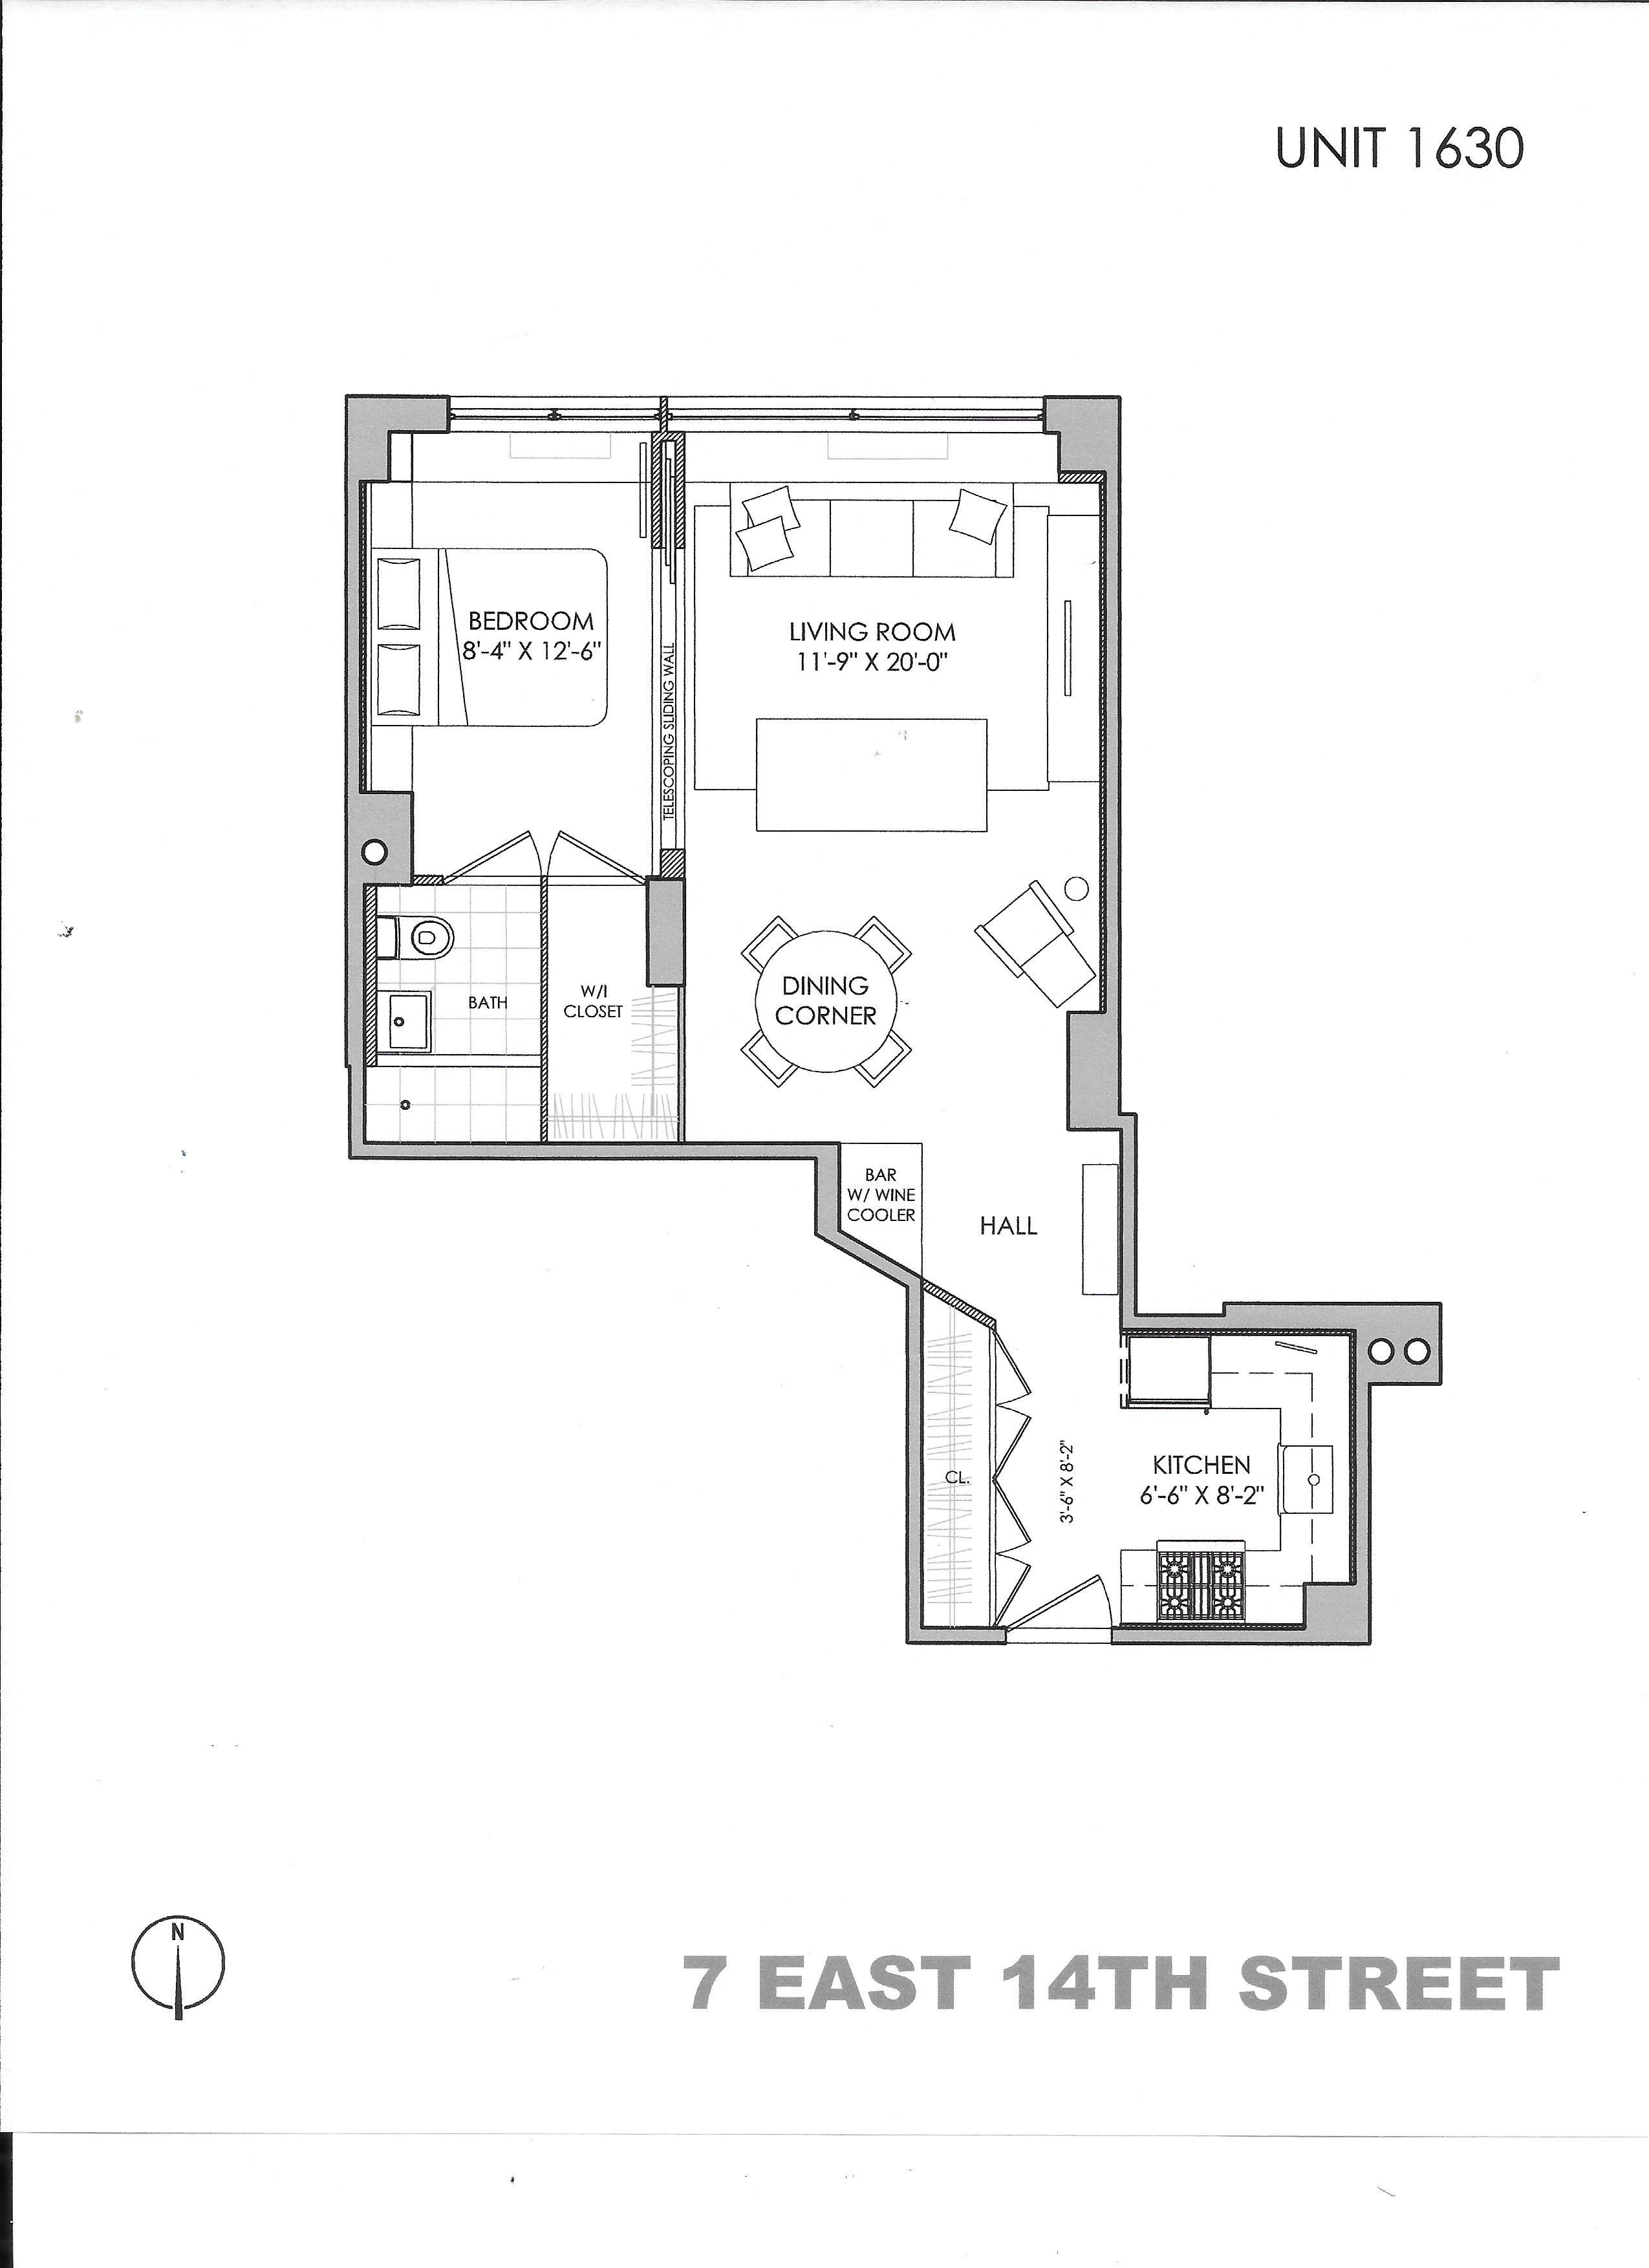 Floorplan for 7 East 14th Street, 1630